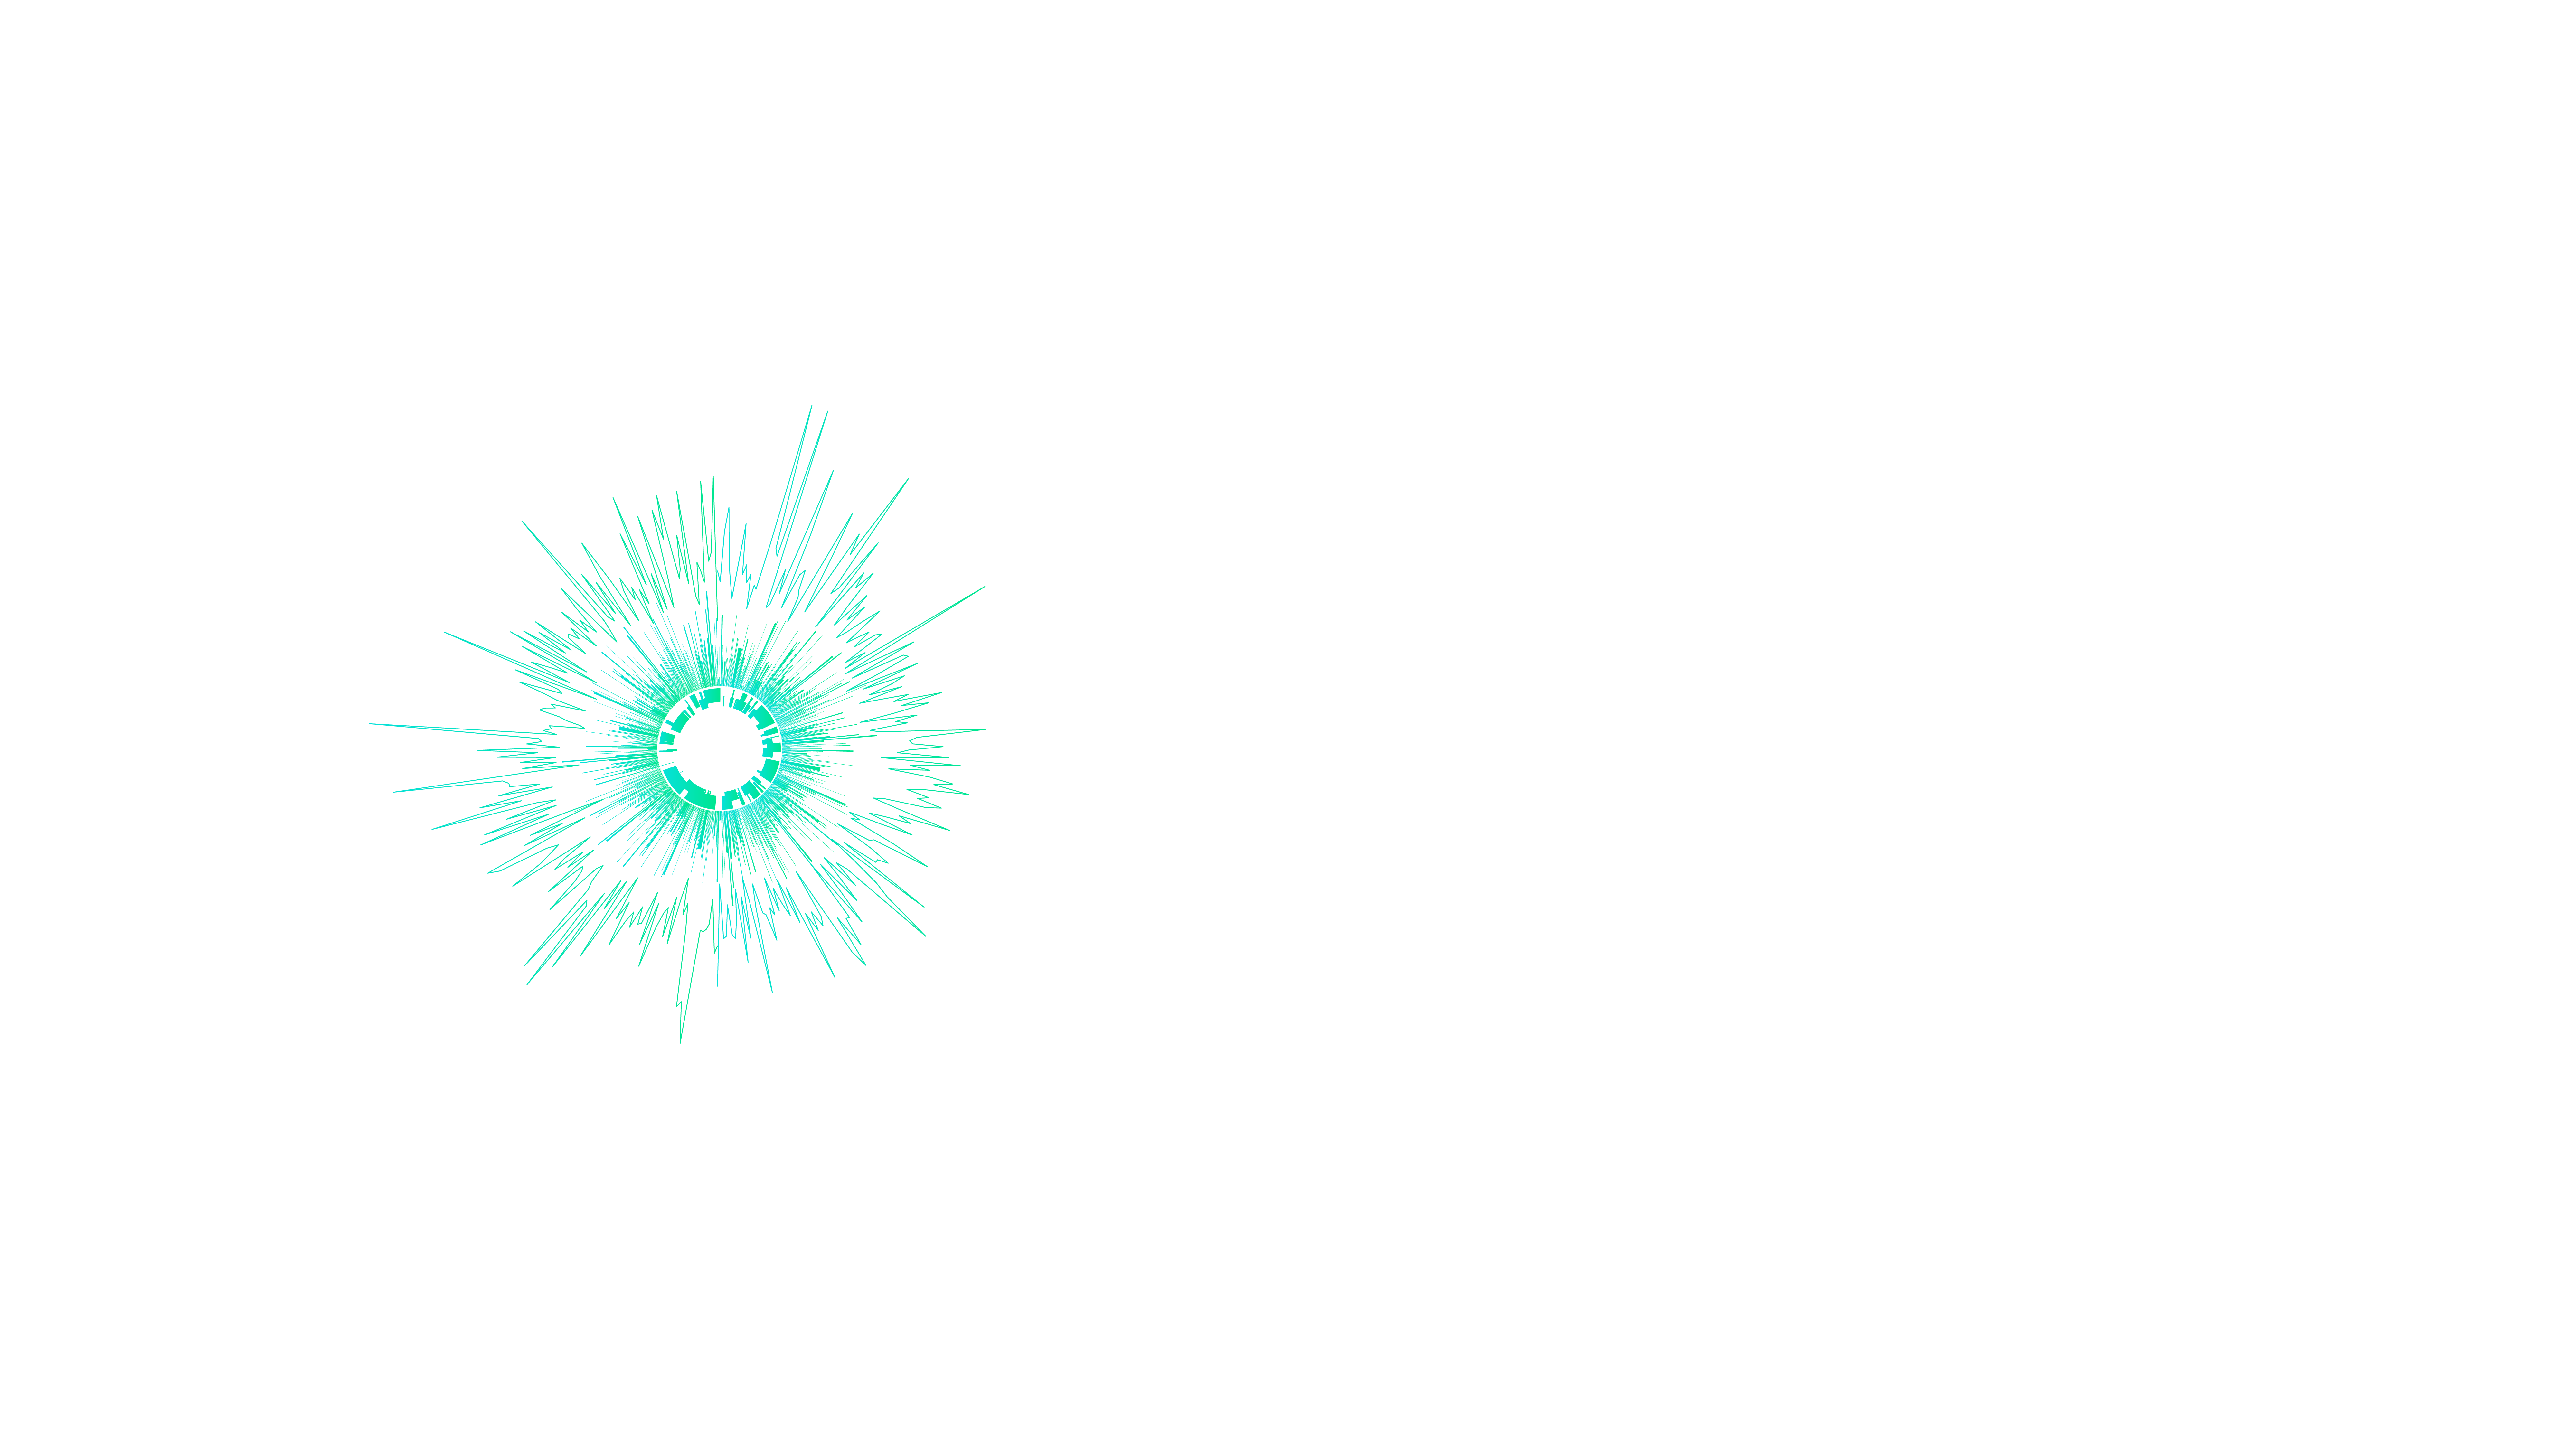 Zeno Intelligence Labs